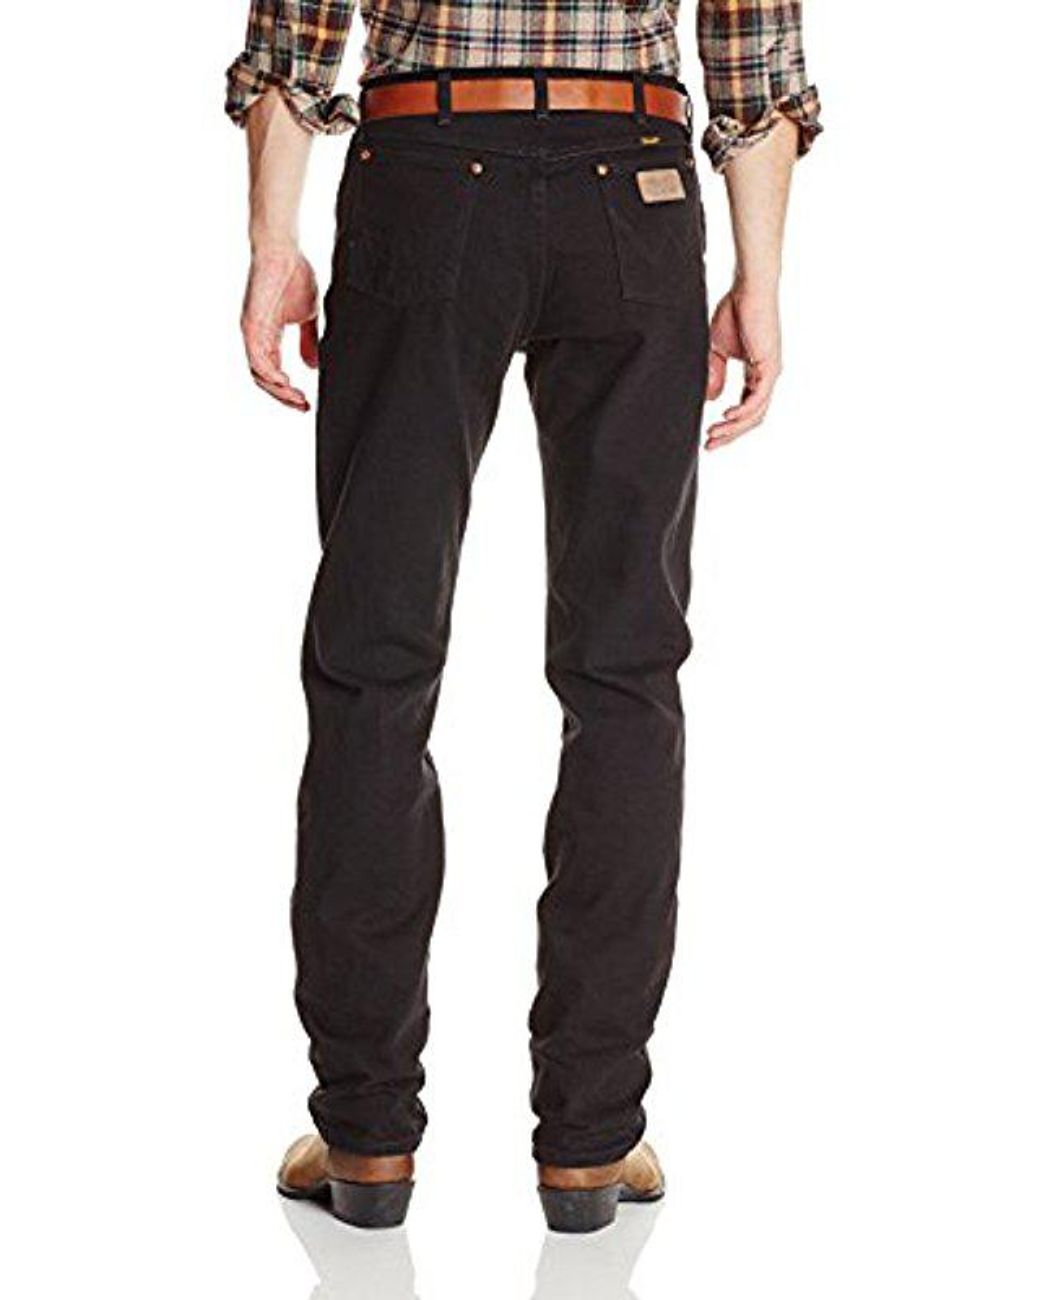 Wrangler Cowboy Cut Original Fit Jean, Shadow Black, 31x32 for Men